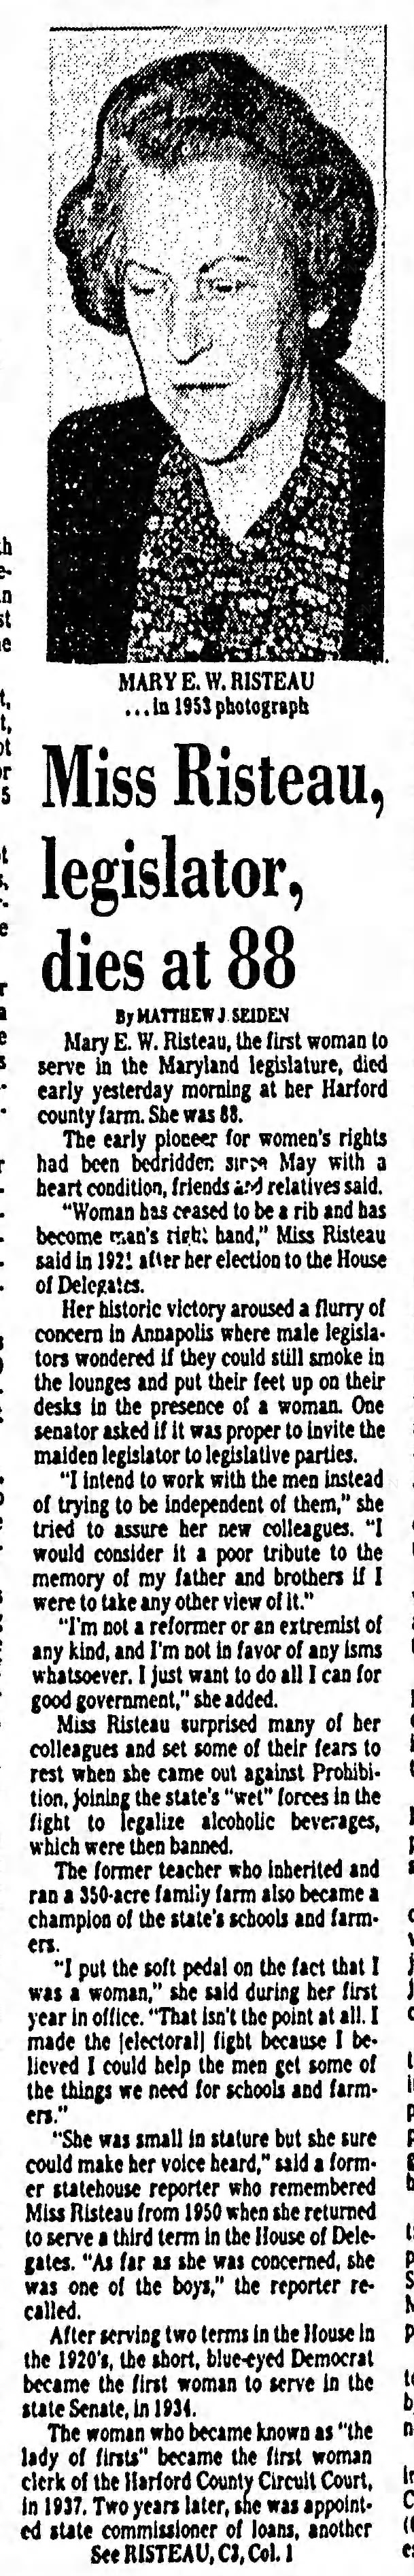 Miss Risteau, legislator, dies at 88; 25 Jul 1978; The Baltimore Sun; C1